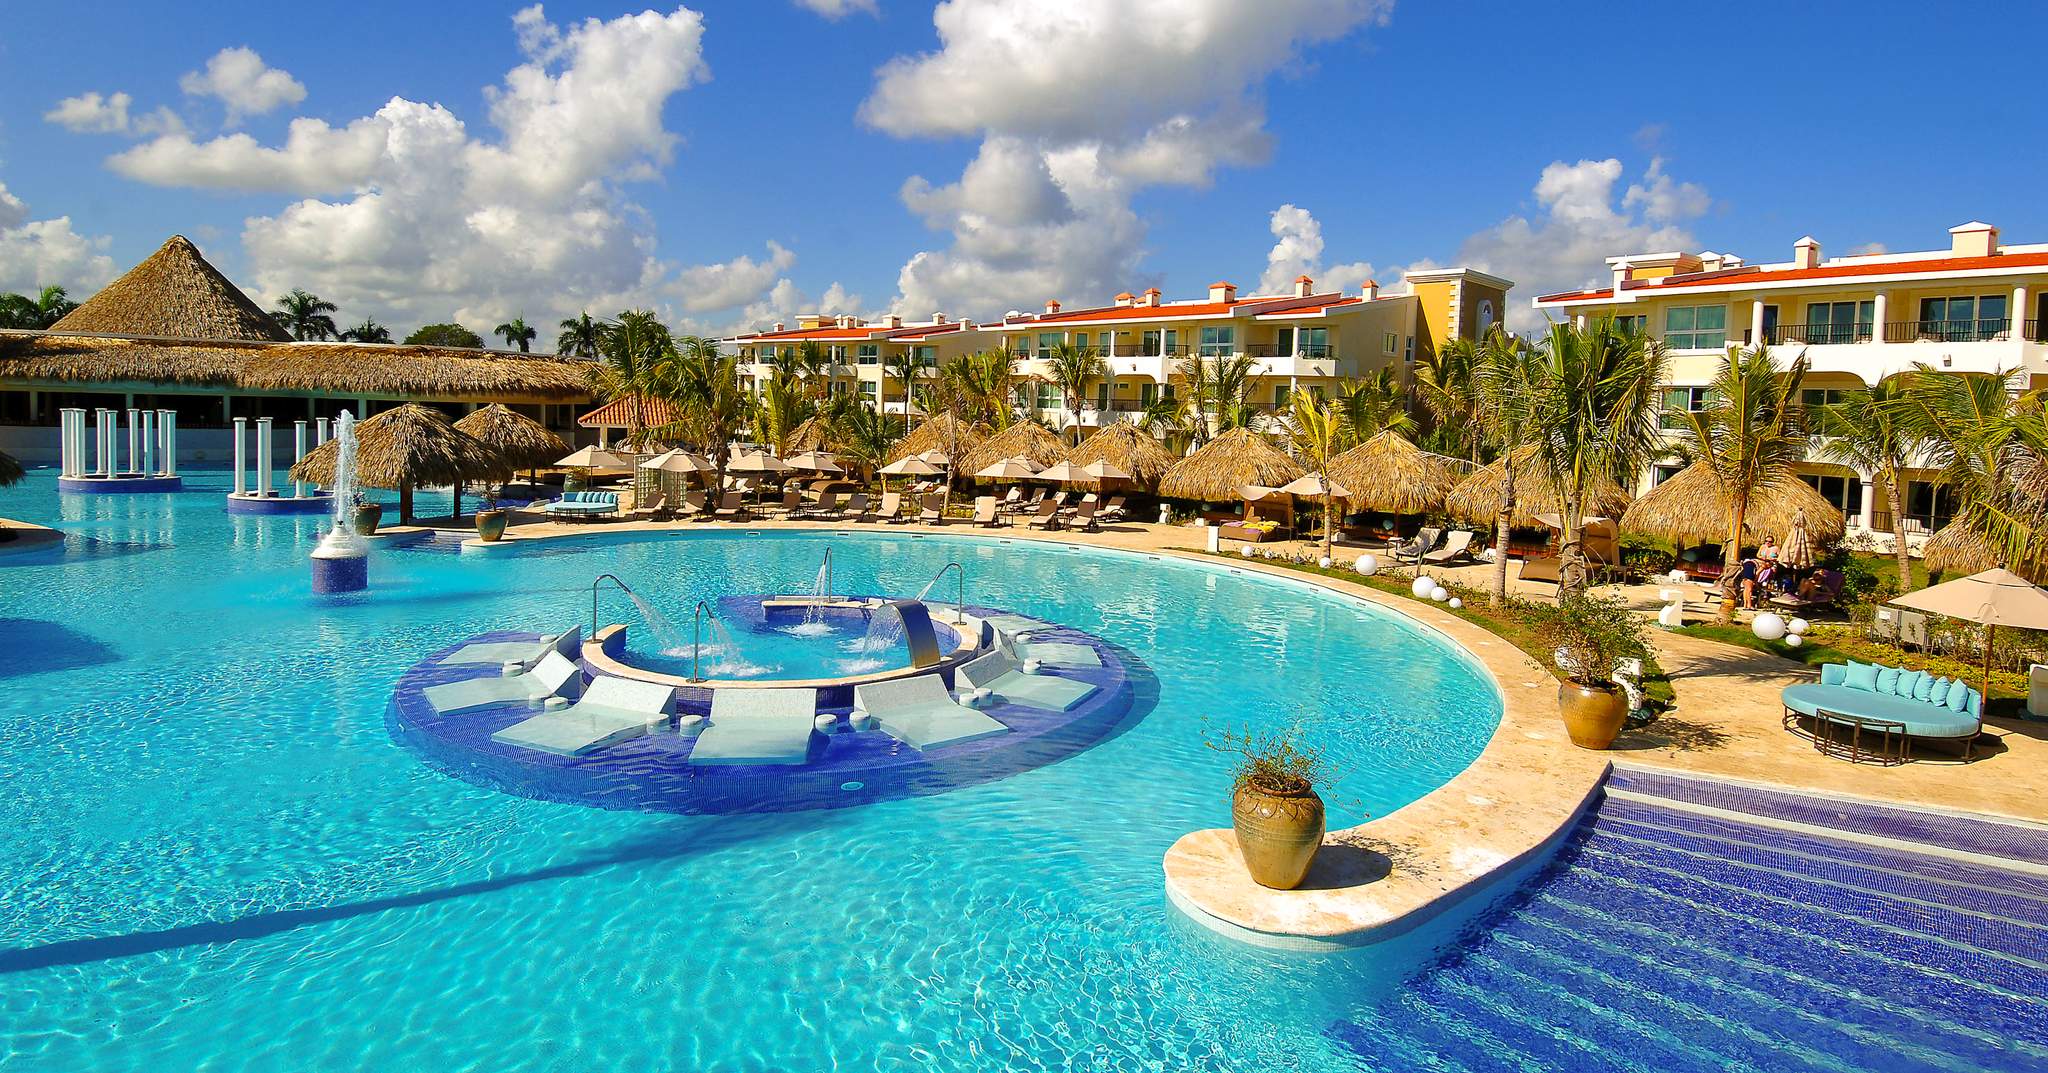 Paradisus Punta Cana Resort in Punta Cana, Dominican Republic - All